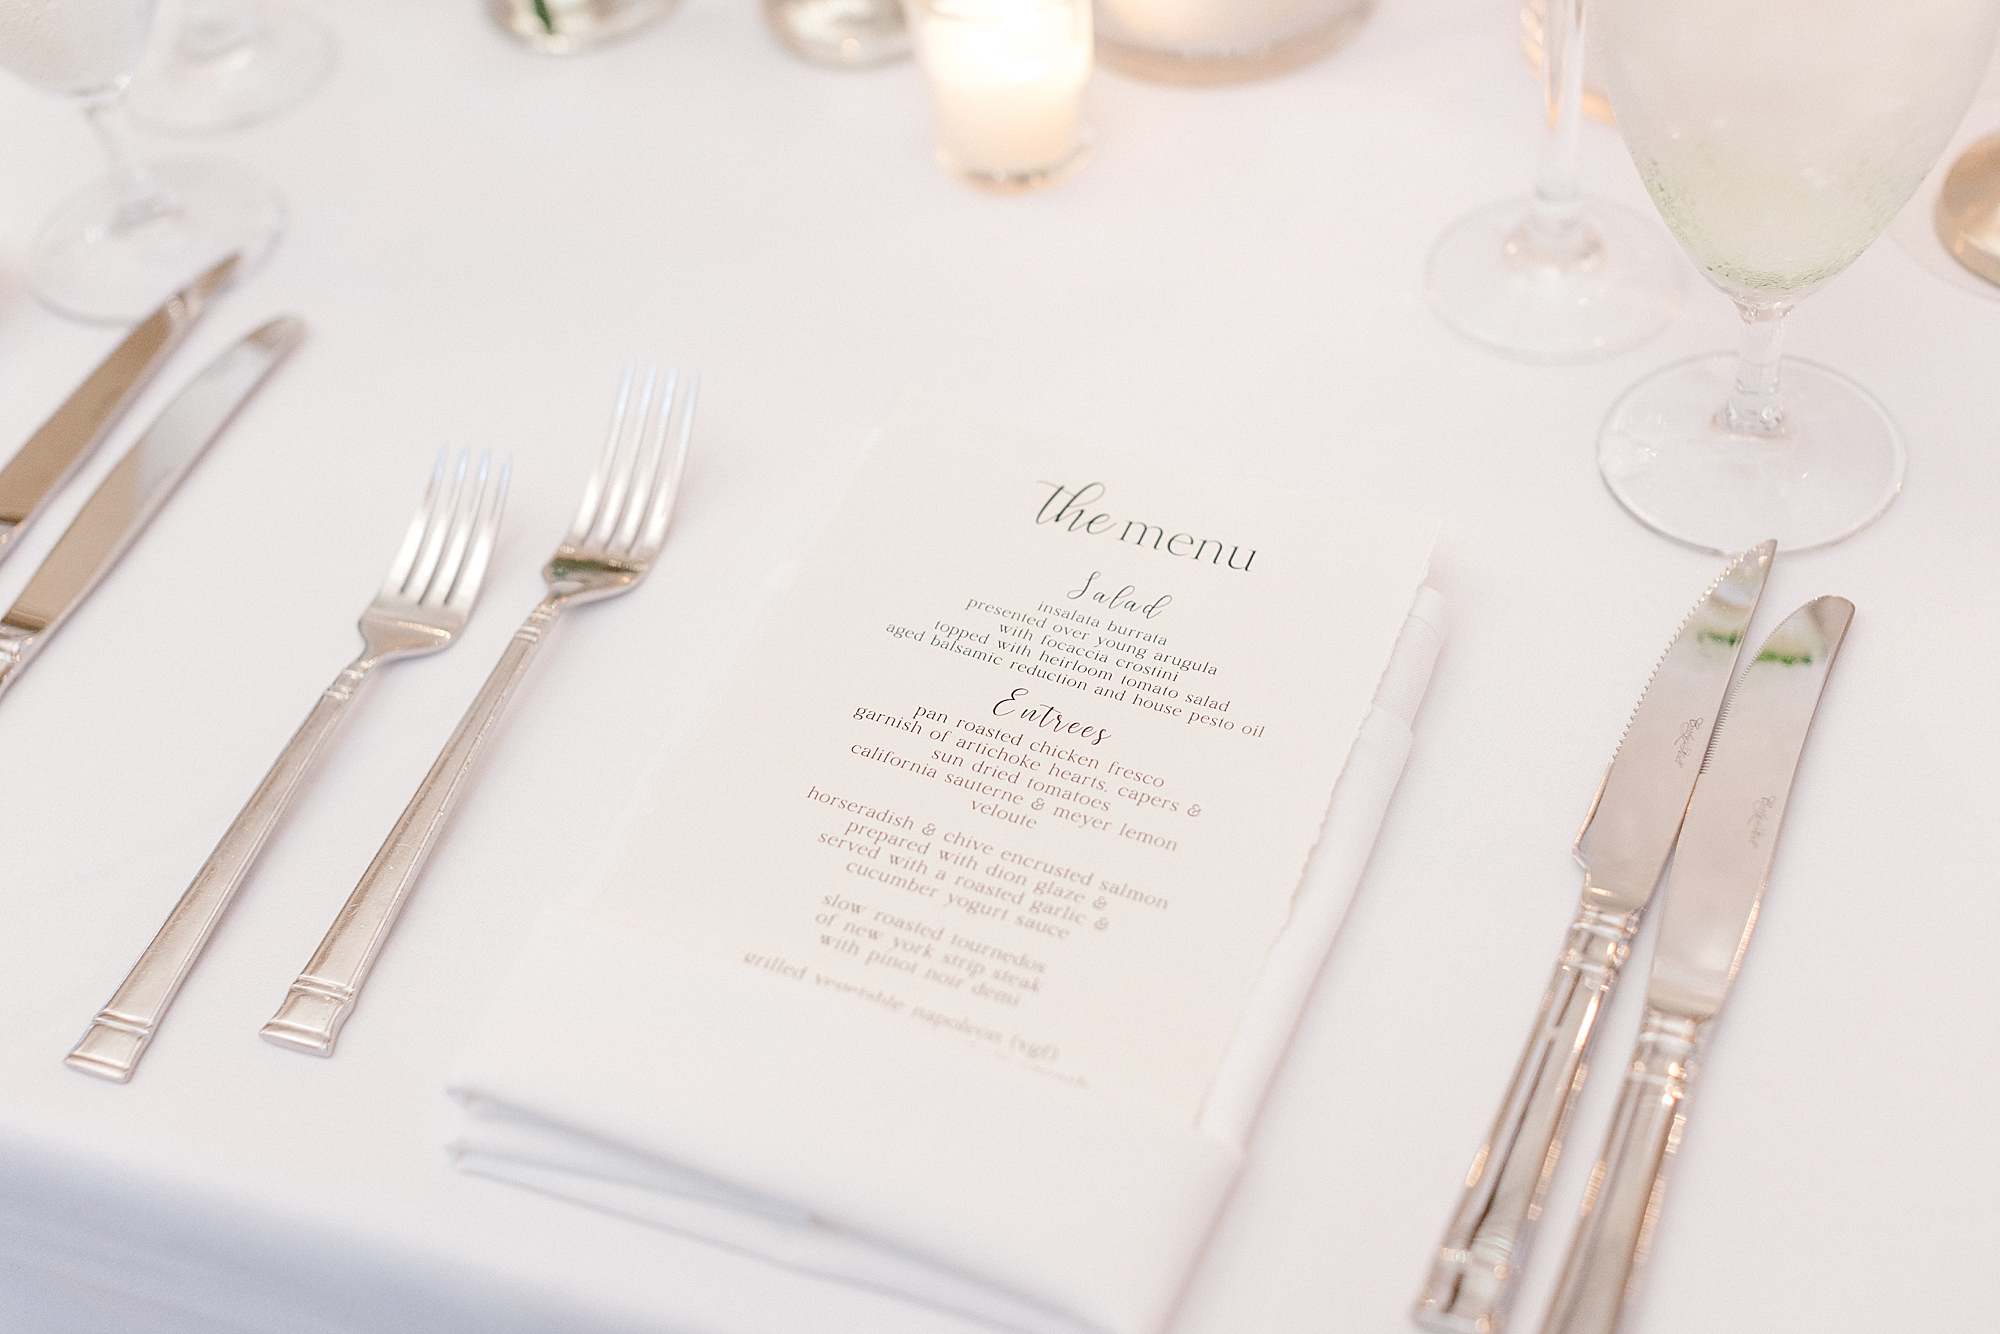 menu card on white napkins for summer wedding reception at Bonnet Island Estate